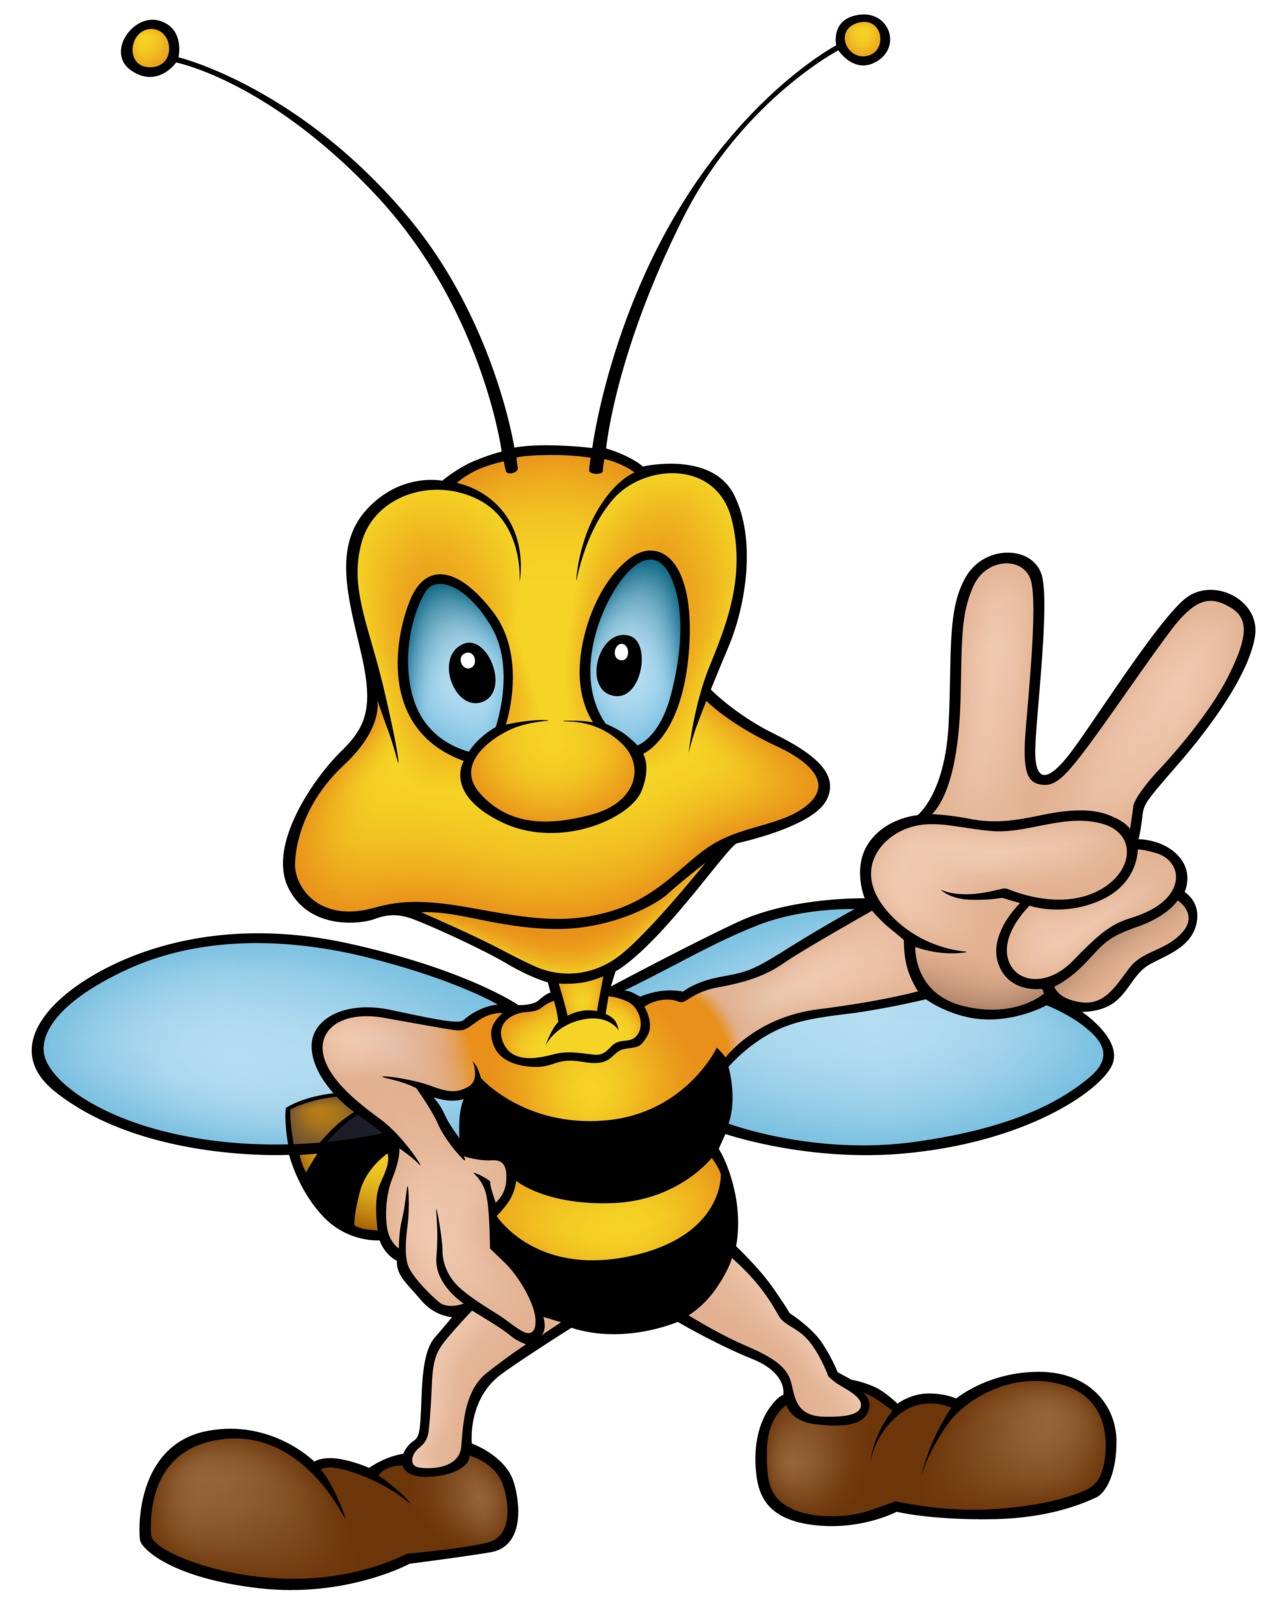 Wasp Victory by illustratorCZ